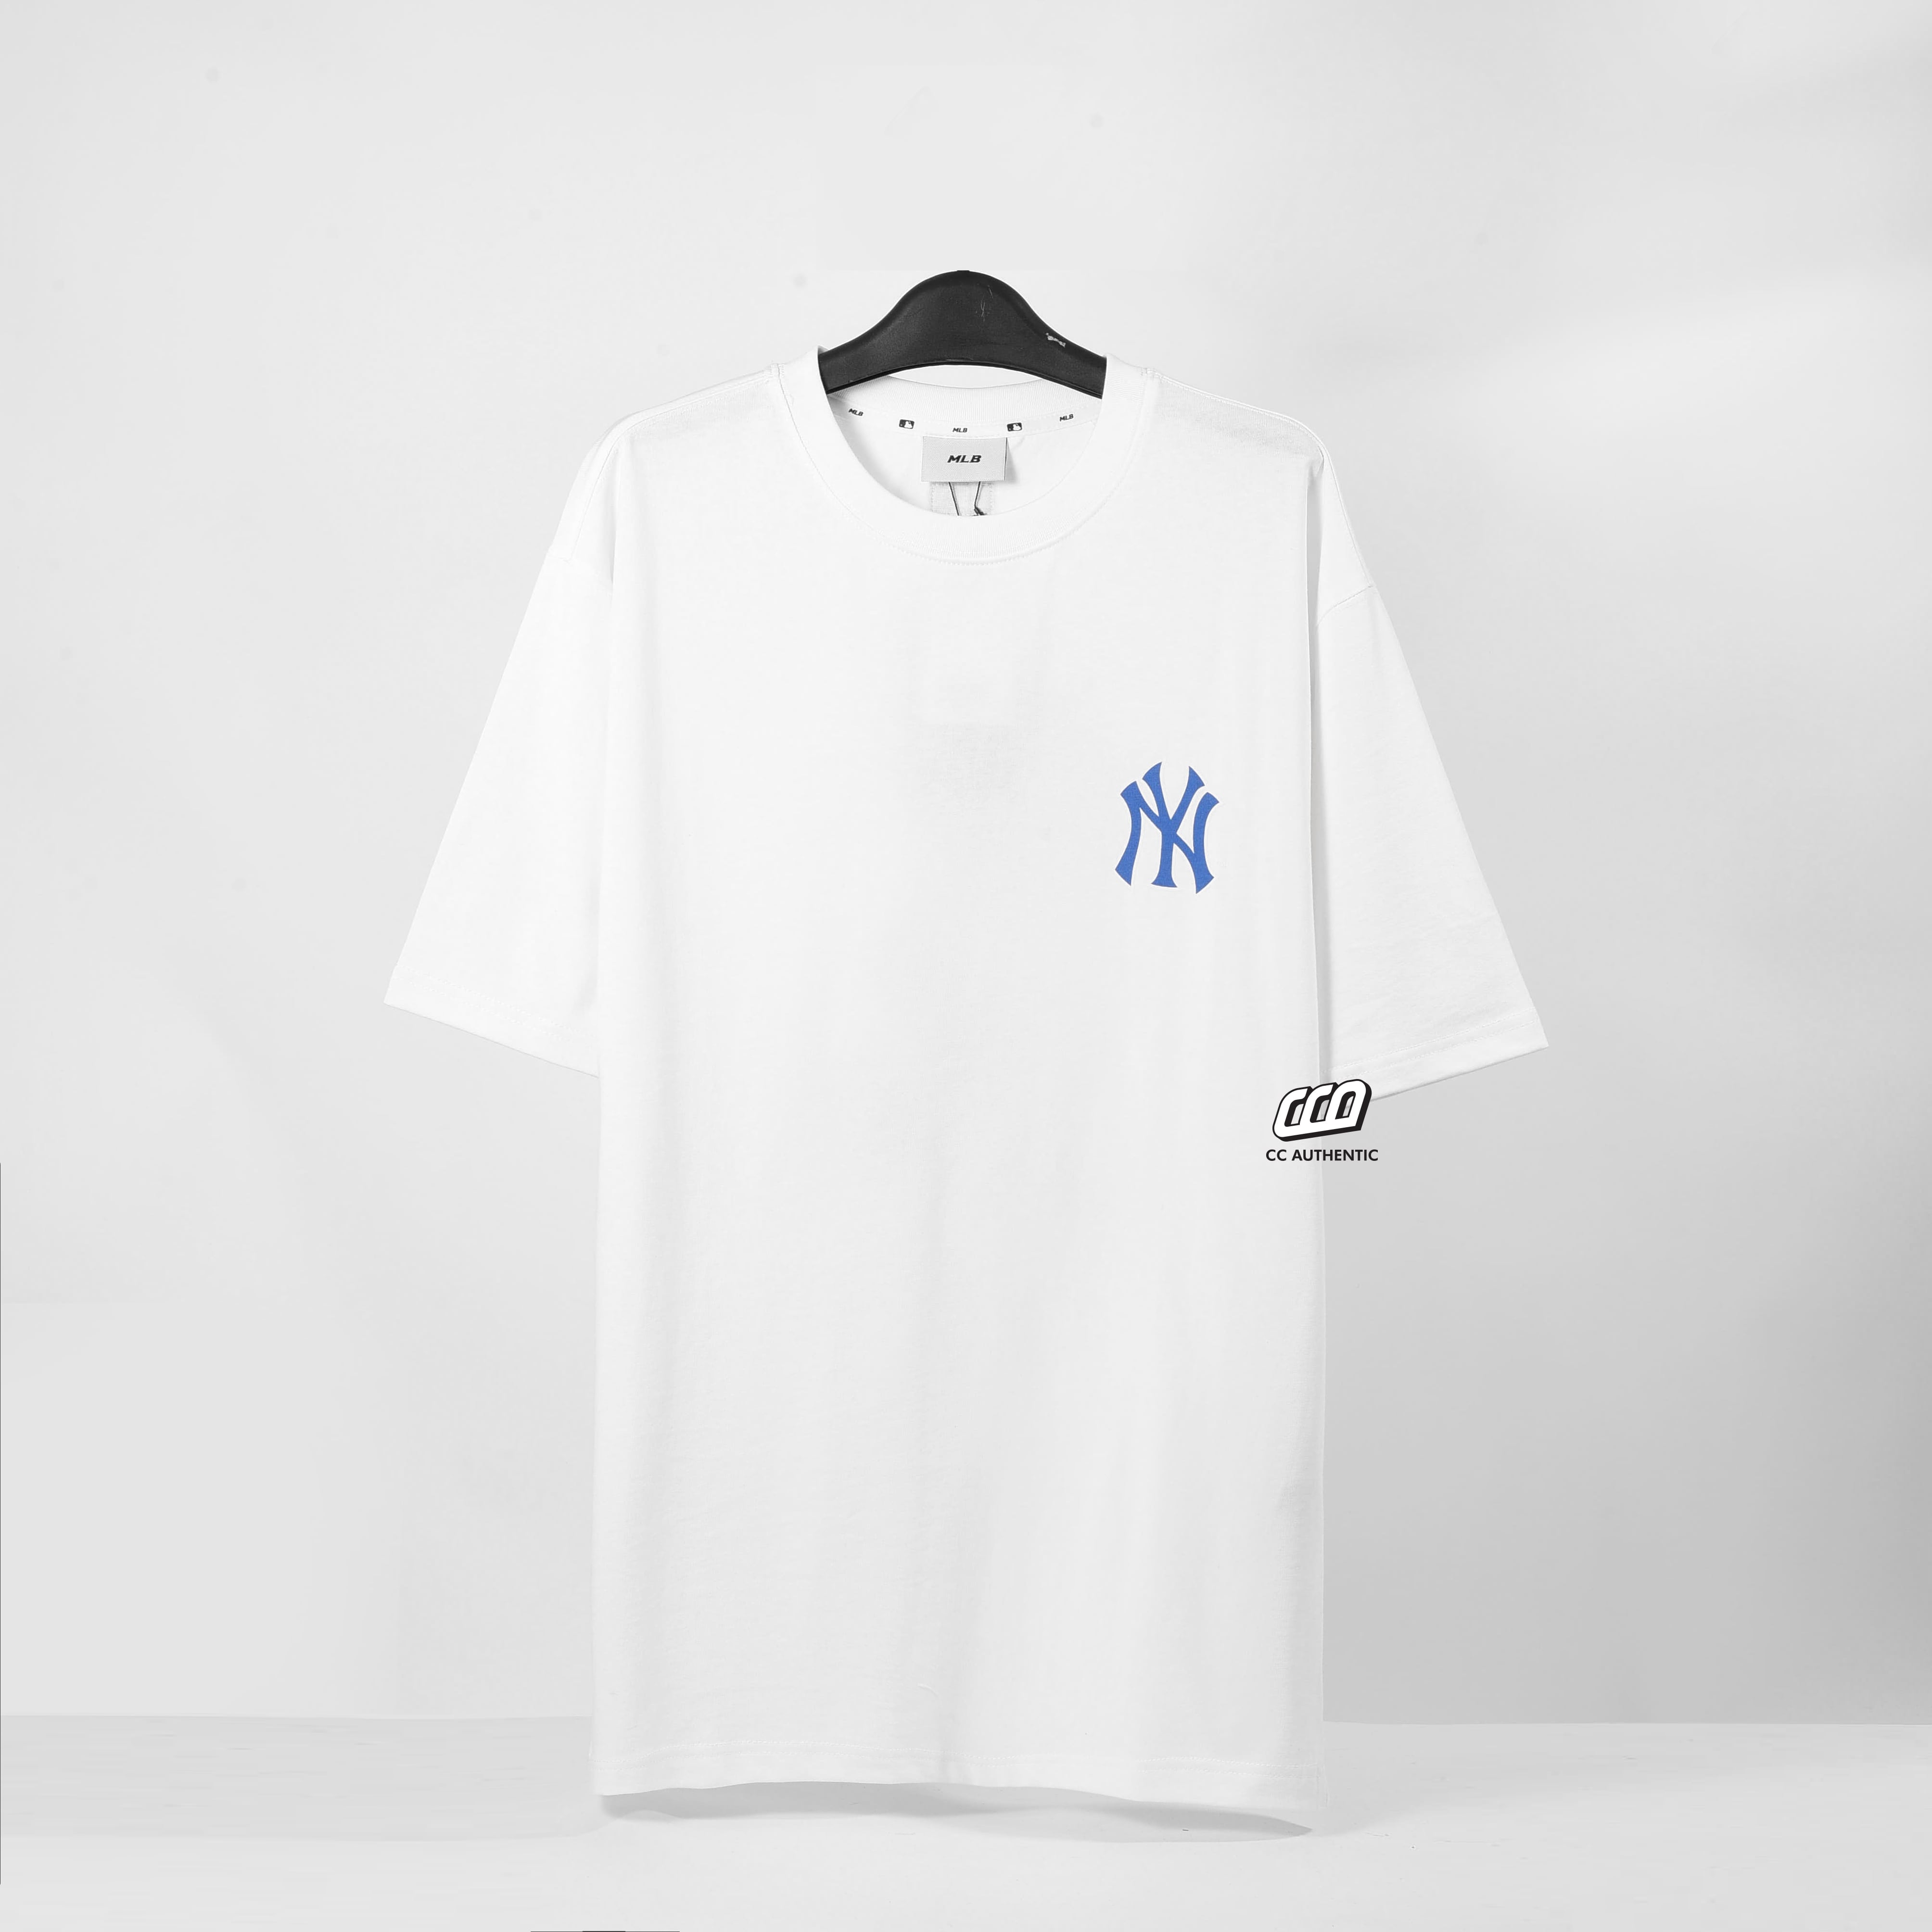 Chi tiết 82+ về MLB t-shirt korean